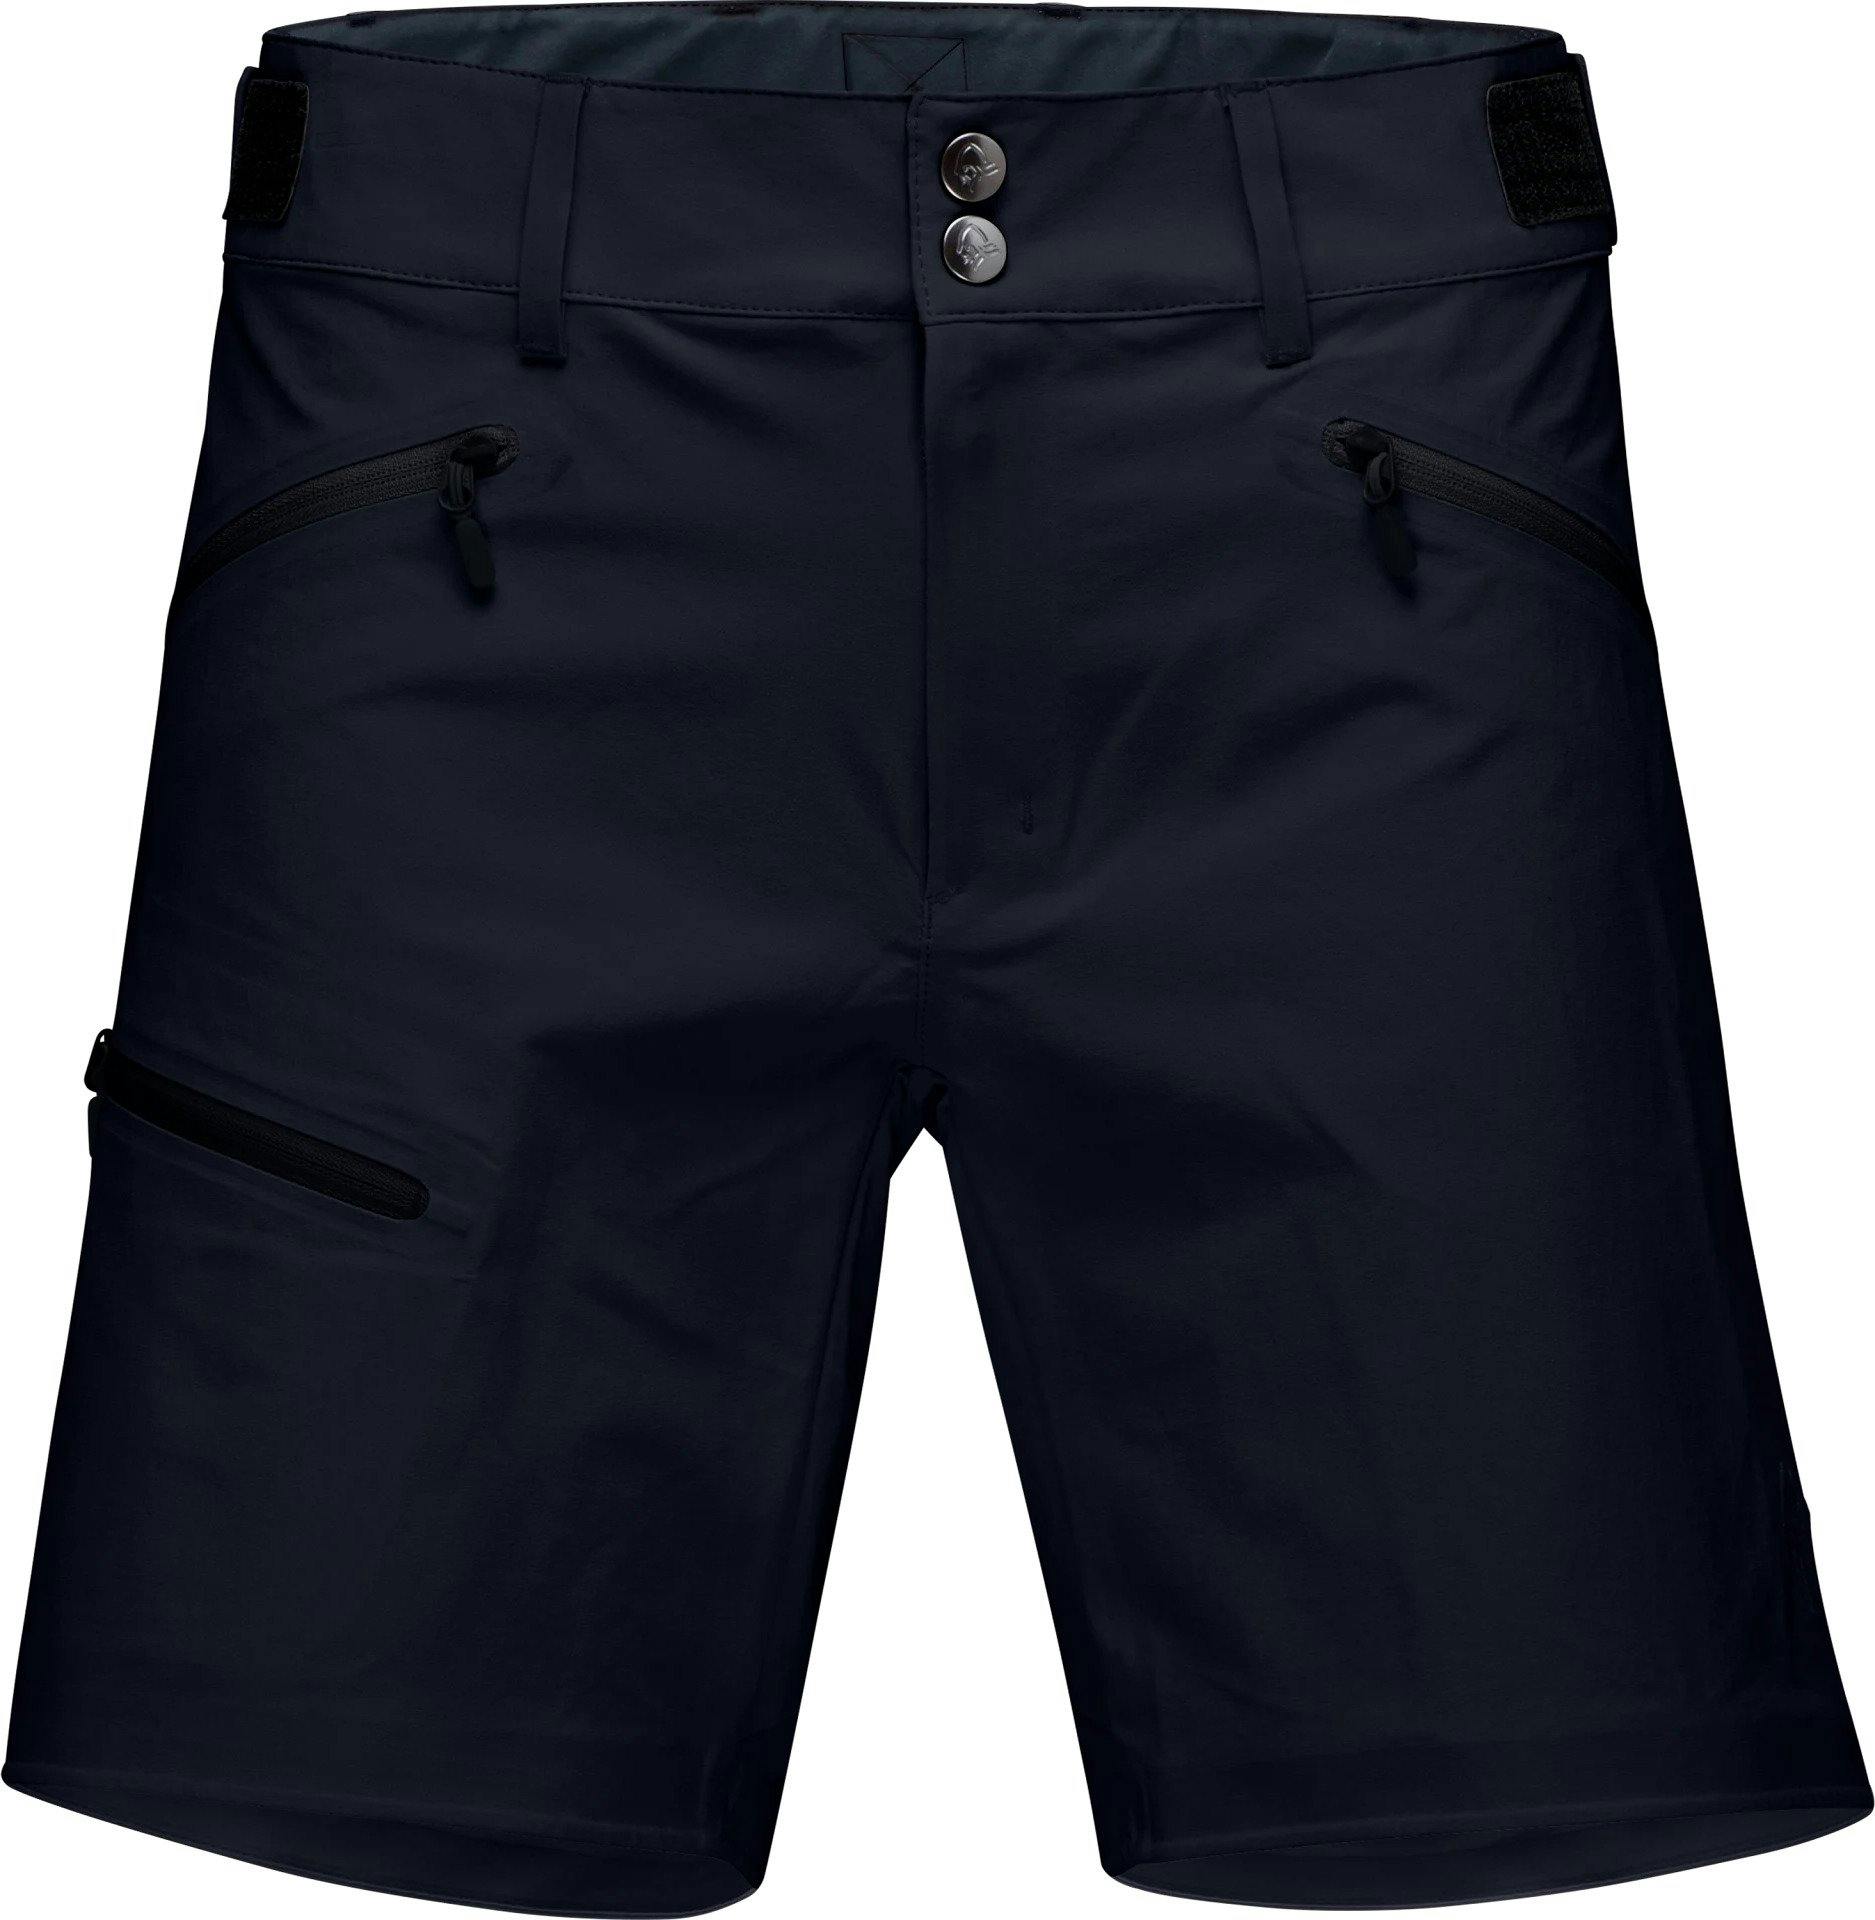 Product image for Falketind Flex1 Shorts - Women's